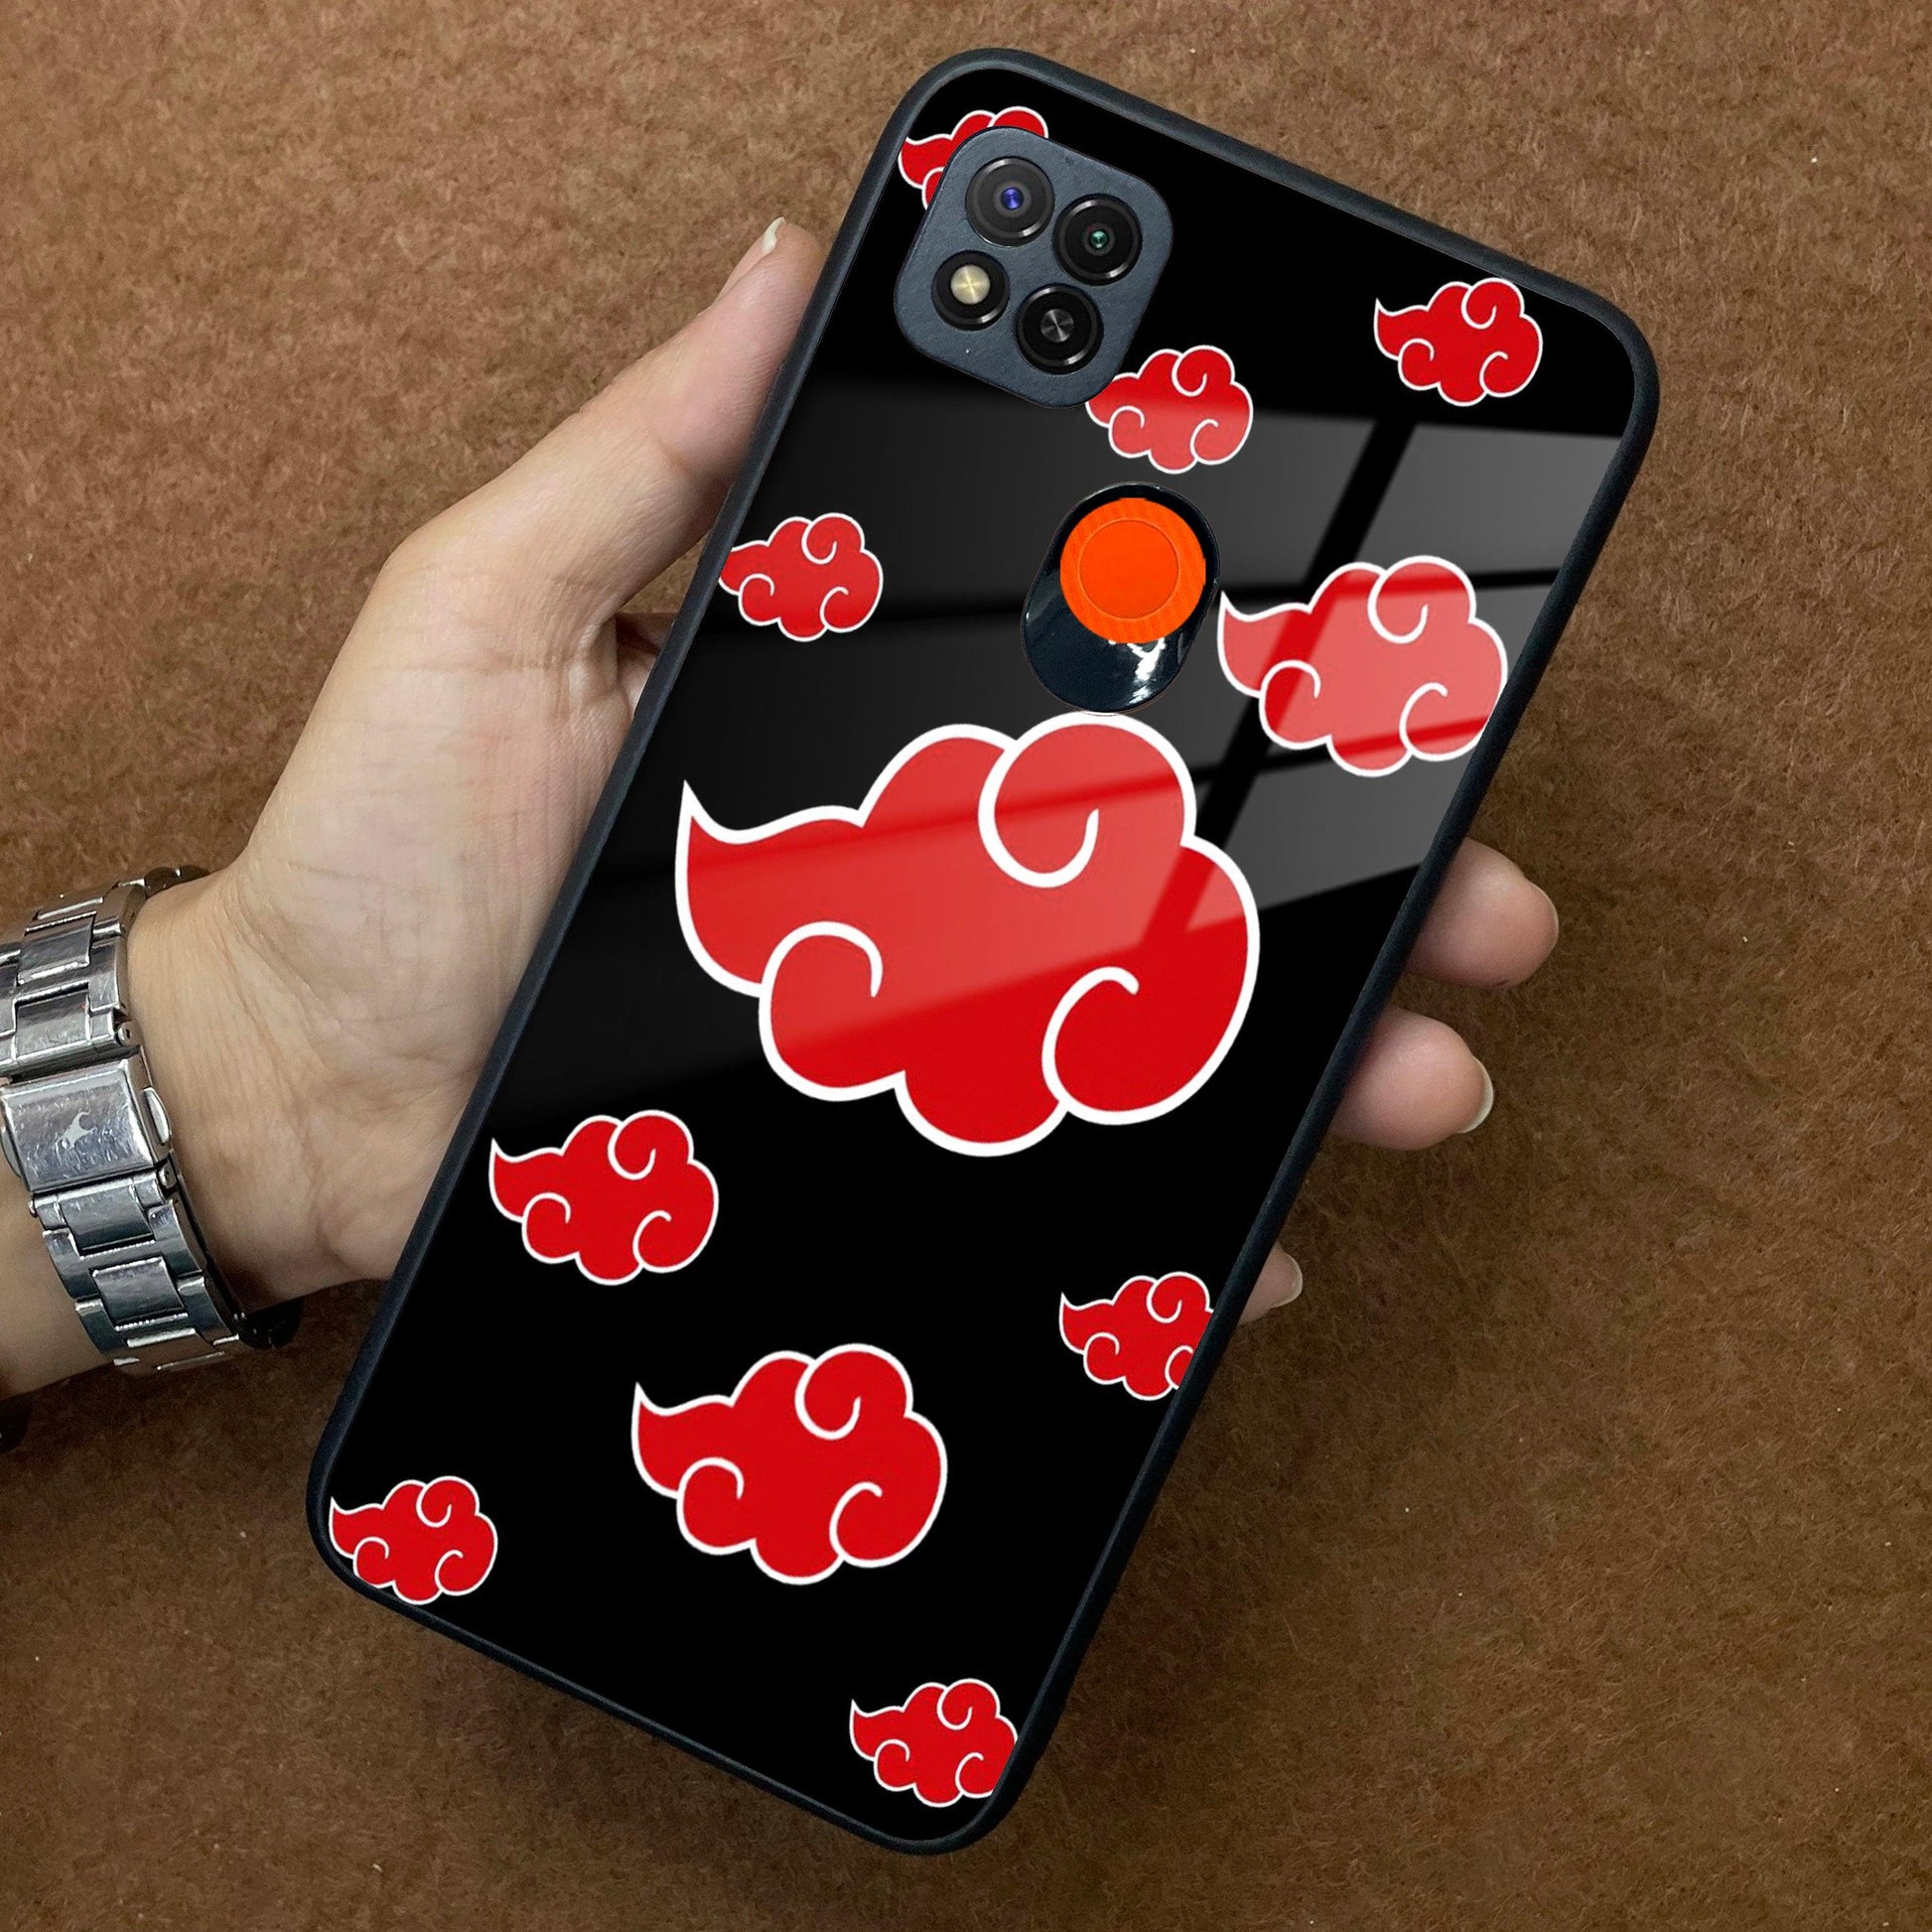 Red Cloud Mobile Glass Phone Case Cover For Redmi/Xiaomi ShopOnCliQ